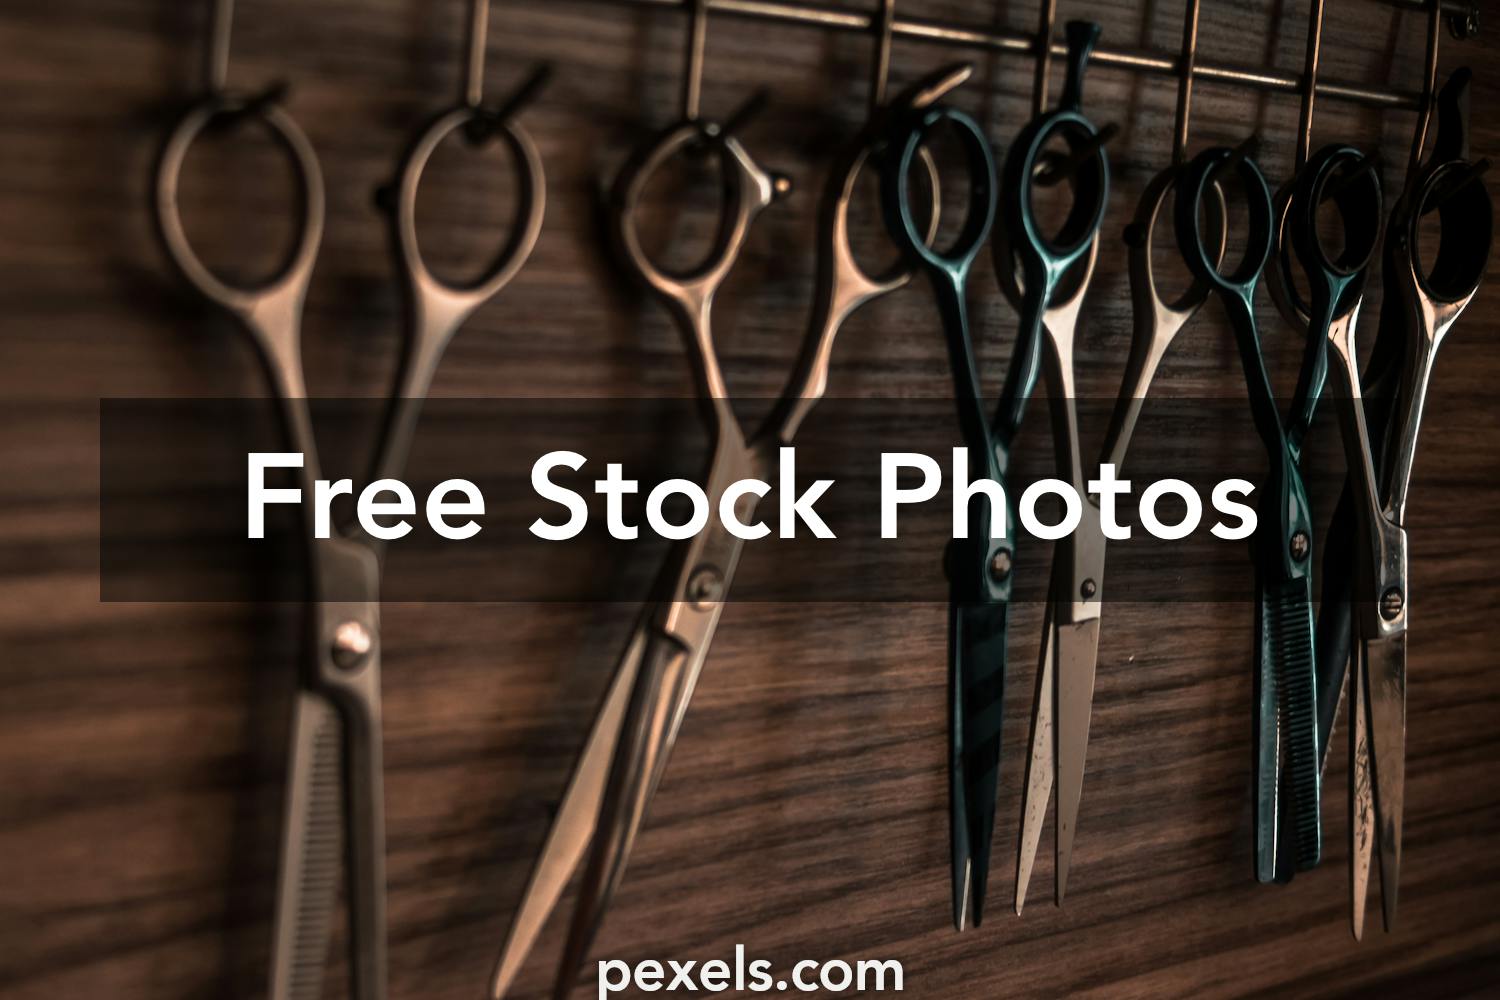 1000+ Interesting Haircut Photos · Pexels · Free Stock Photos